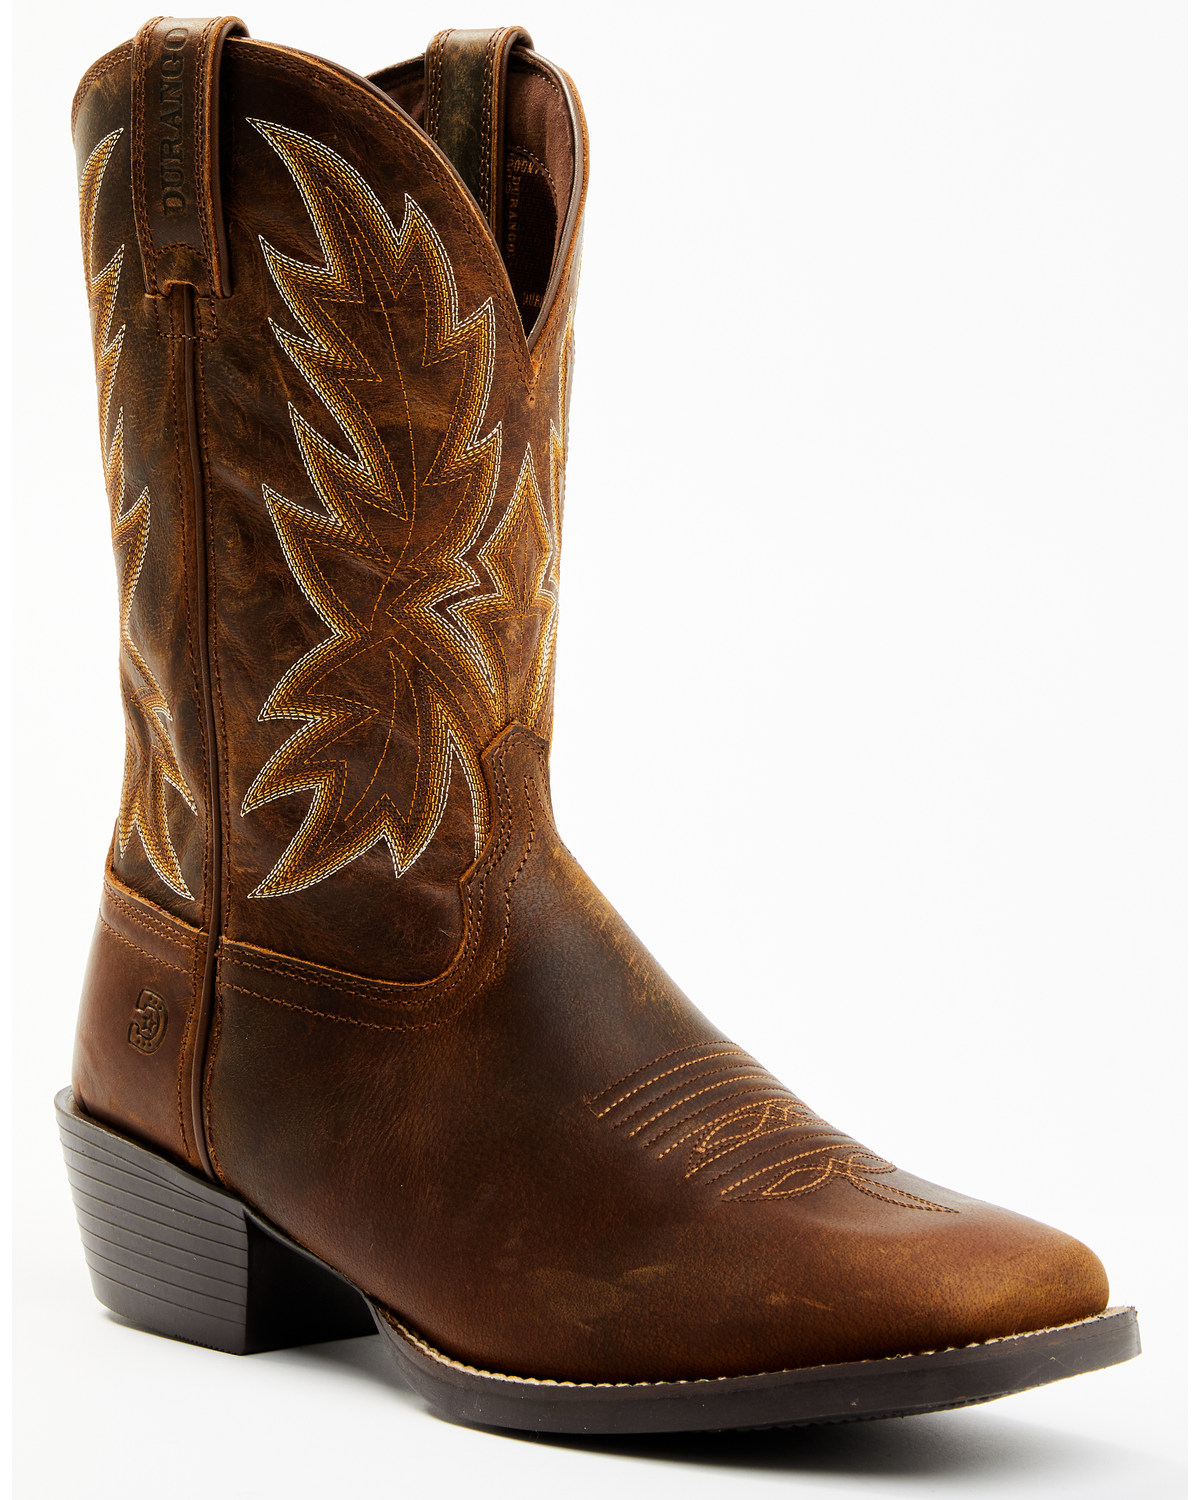 Durango Men's Westward Roughstock Western Boots